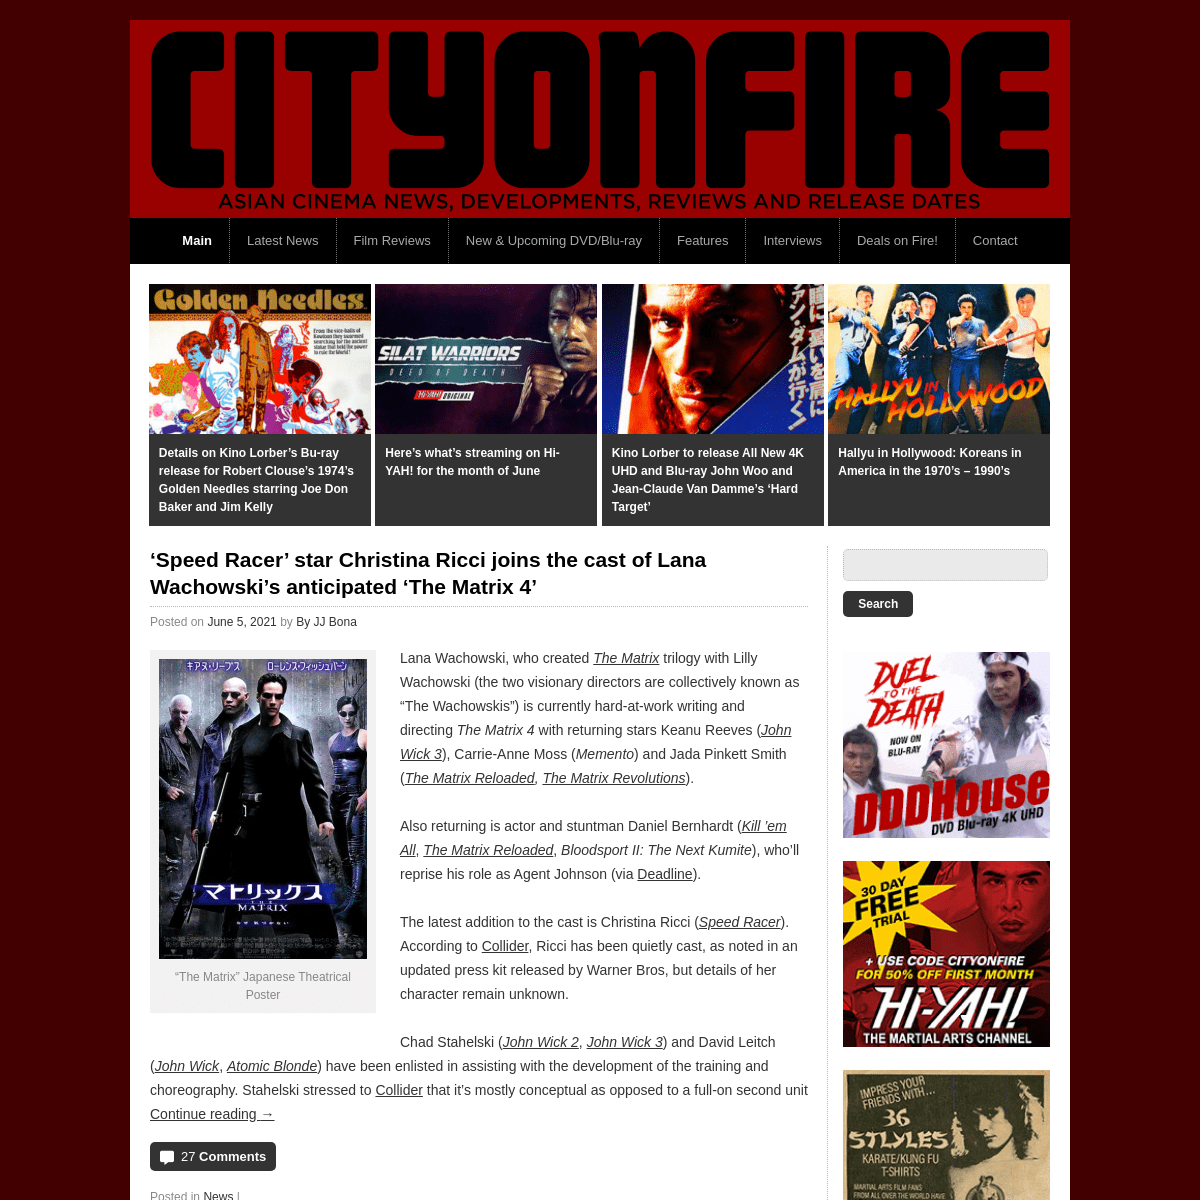 A complete backup of https://cityonfire.com